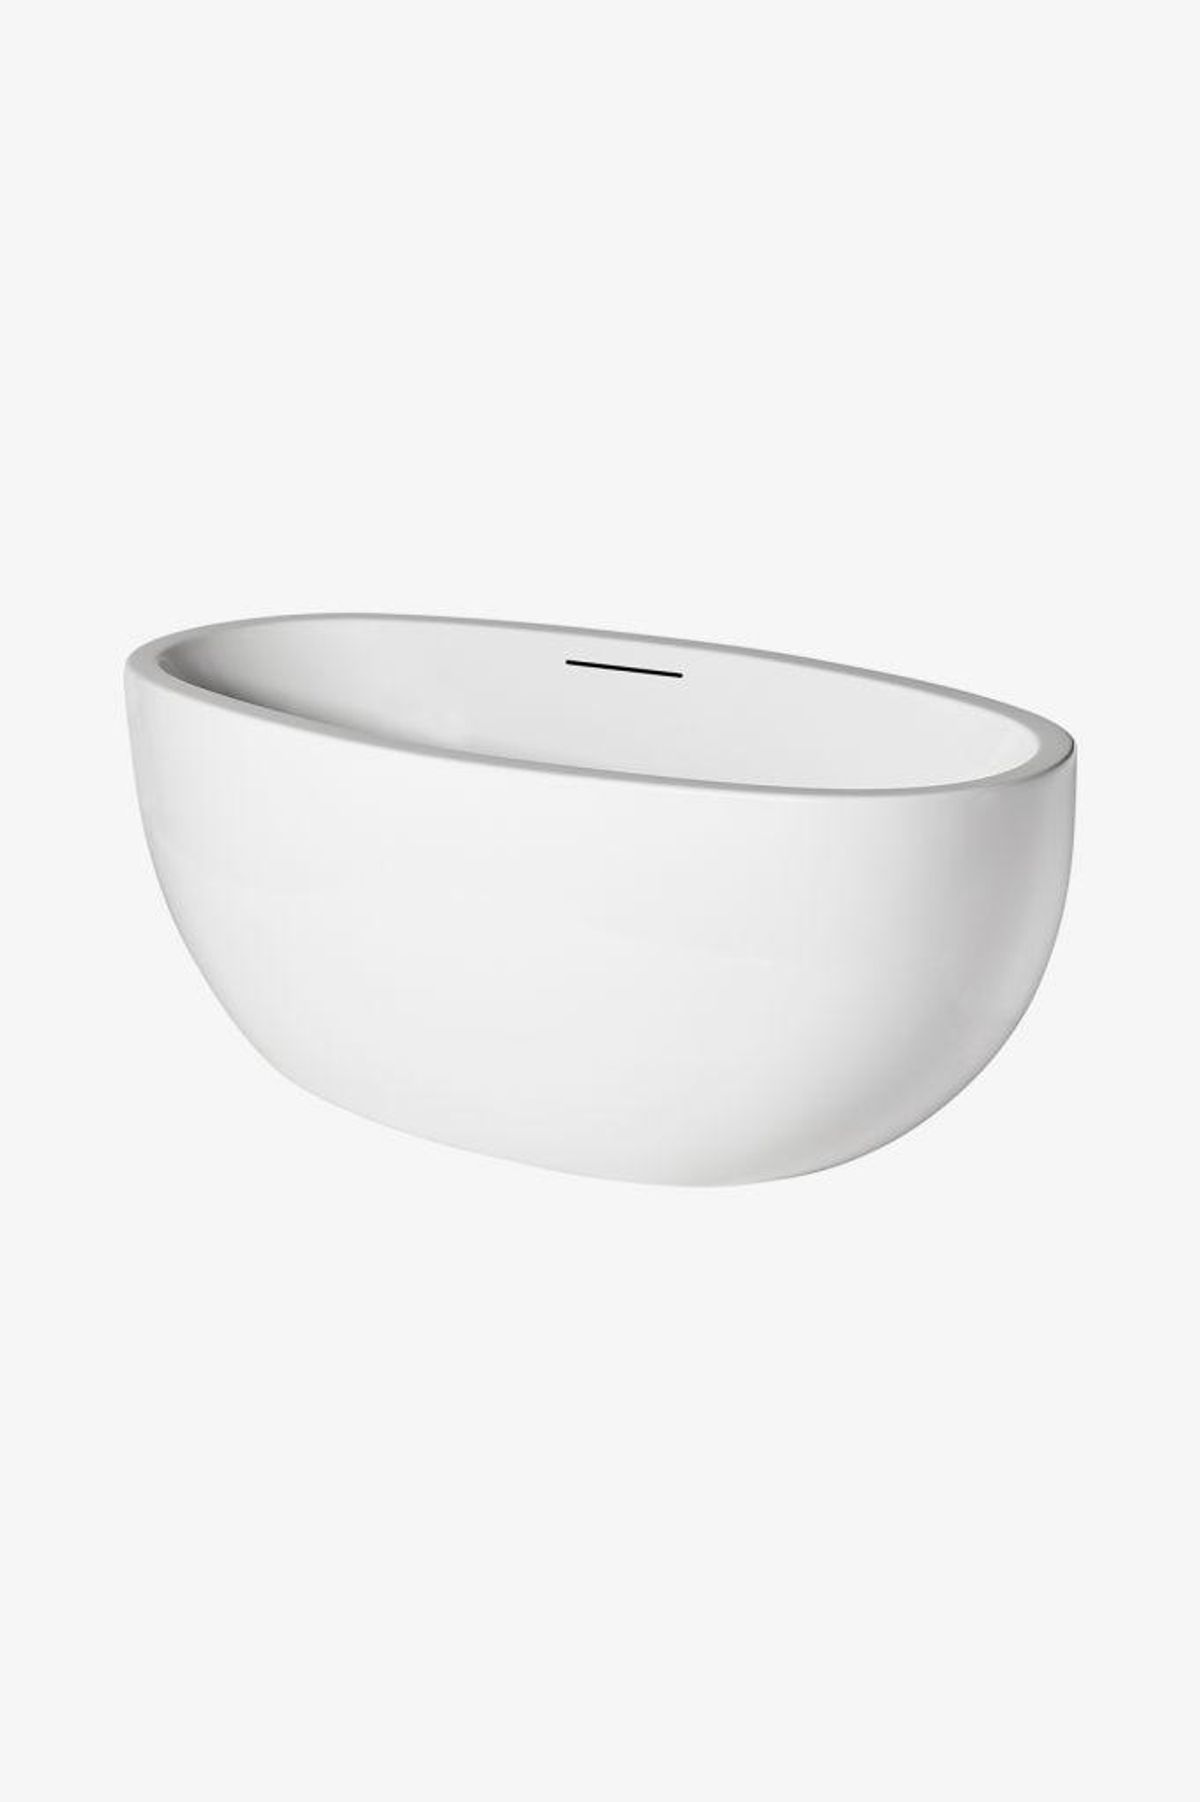 waterworks styli freestanding acrylic oval bathtub